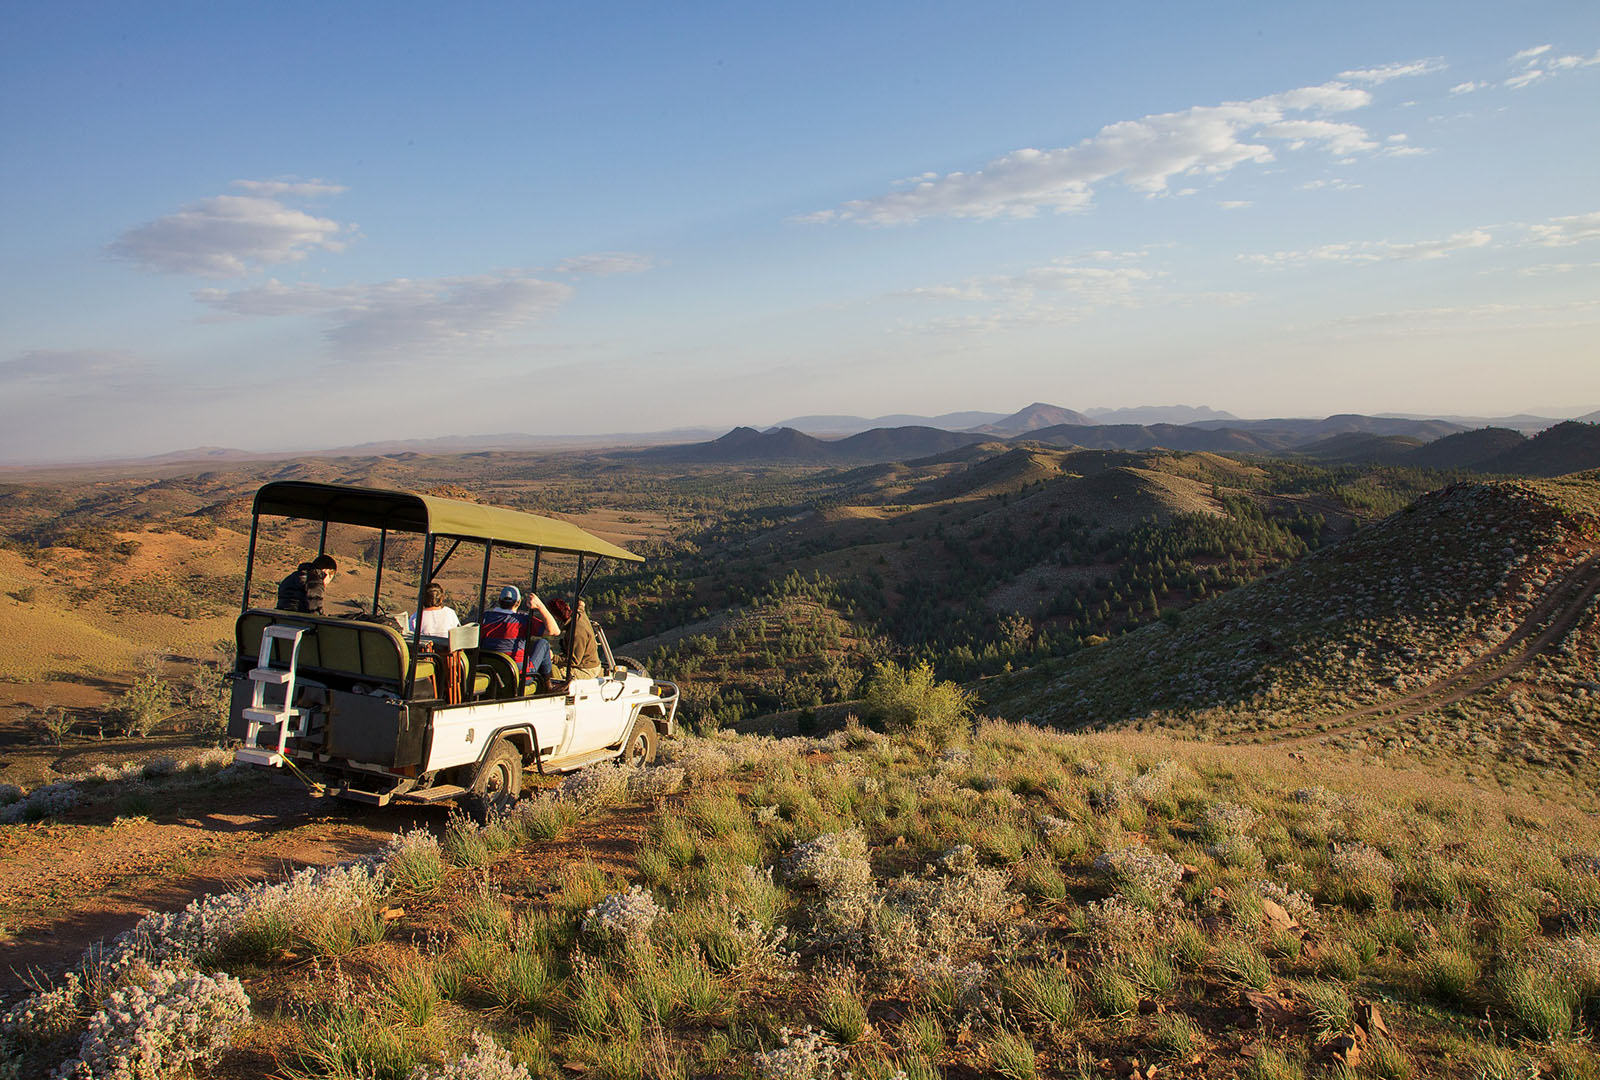 A safari drive through Flinders Ranges to enhance the Australian Outback experience